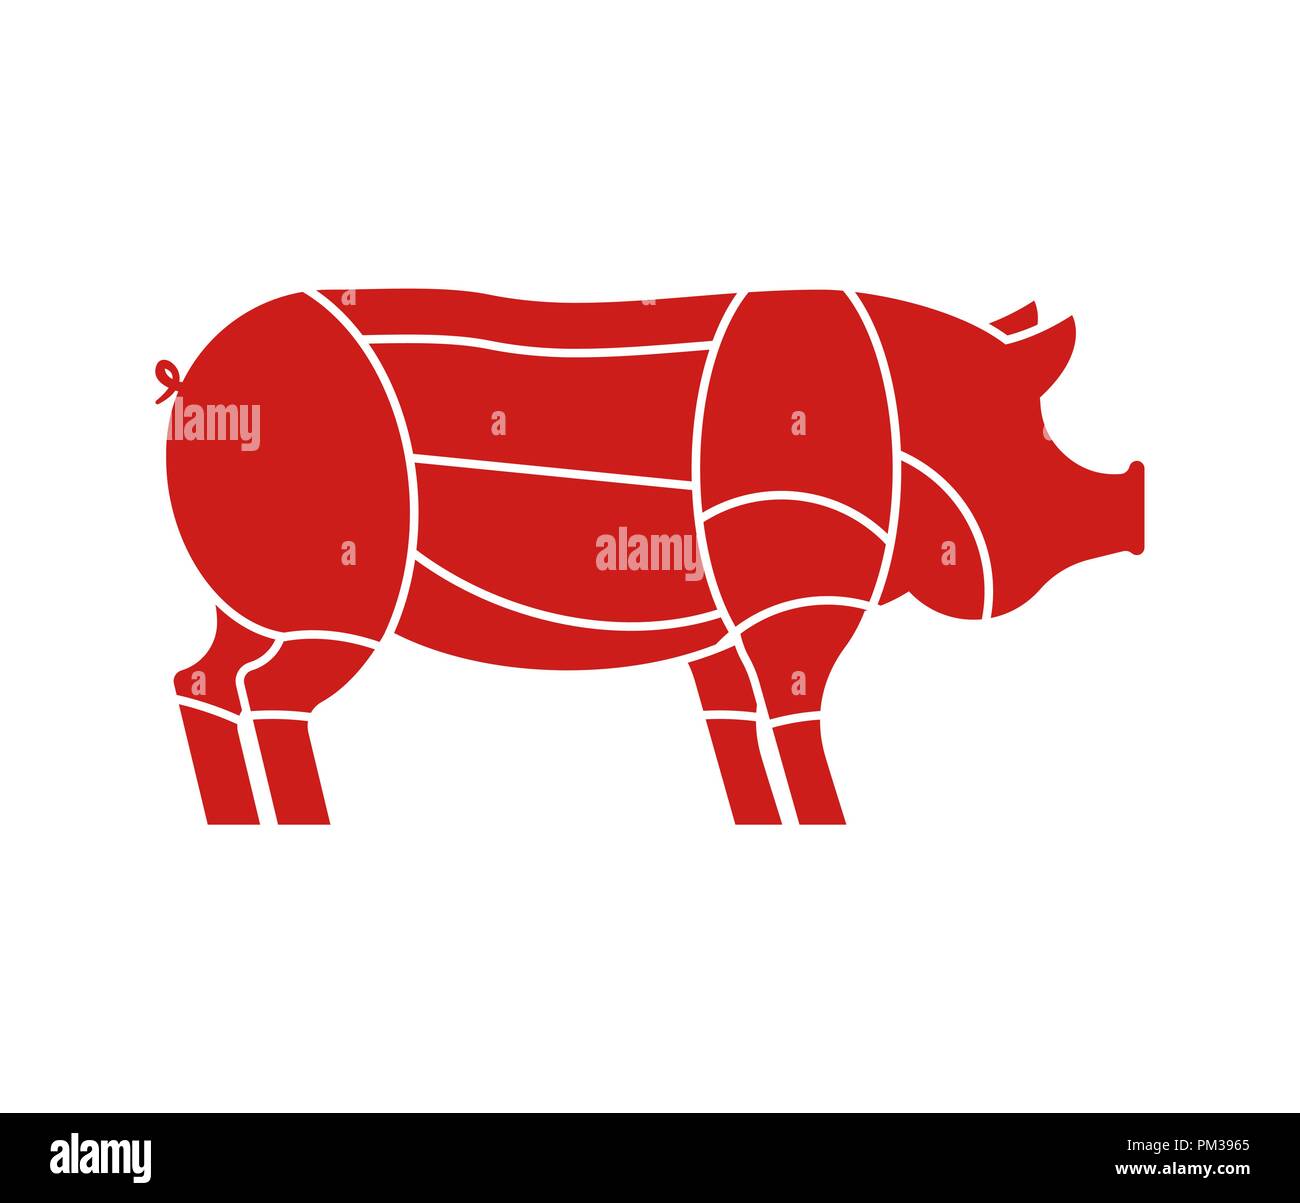 Cuts pork butcher cuts diagram hi-res stock photography and images - Alamy